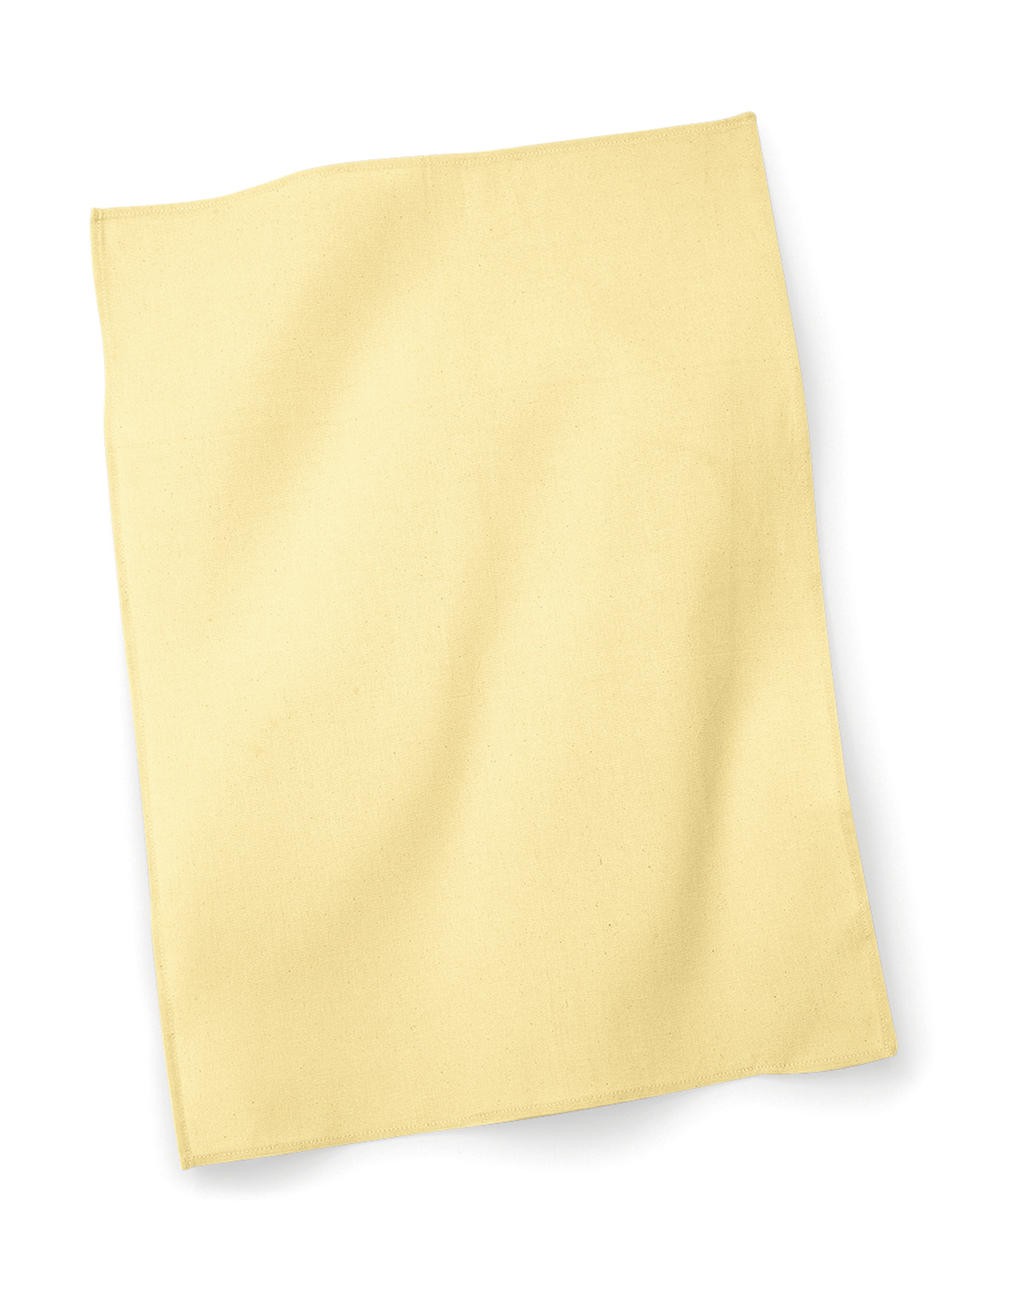 Westford Mill WM701 - Tea towel